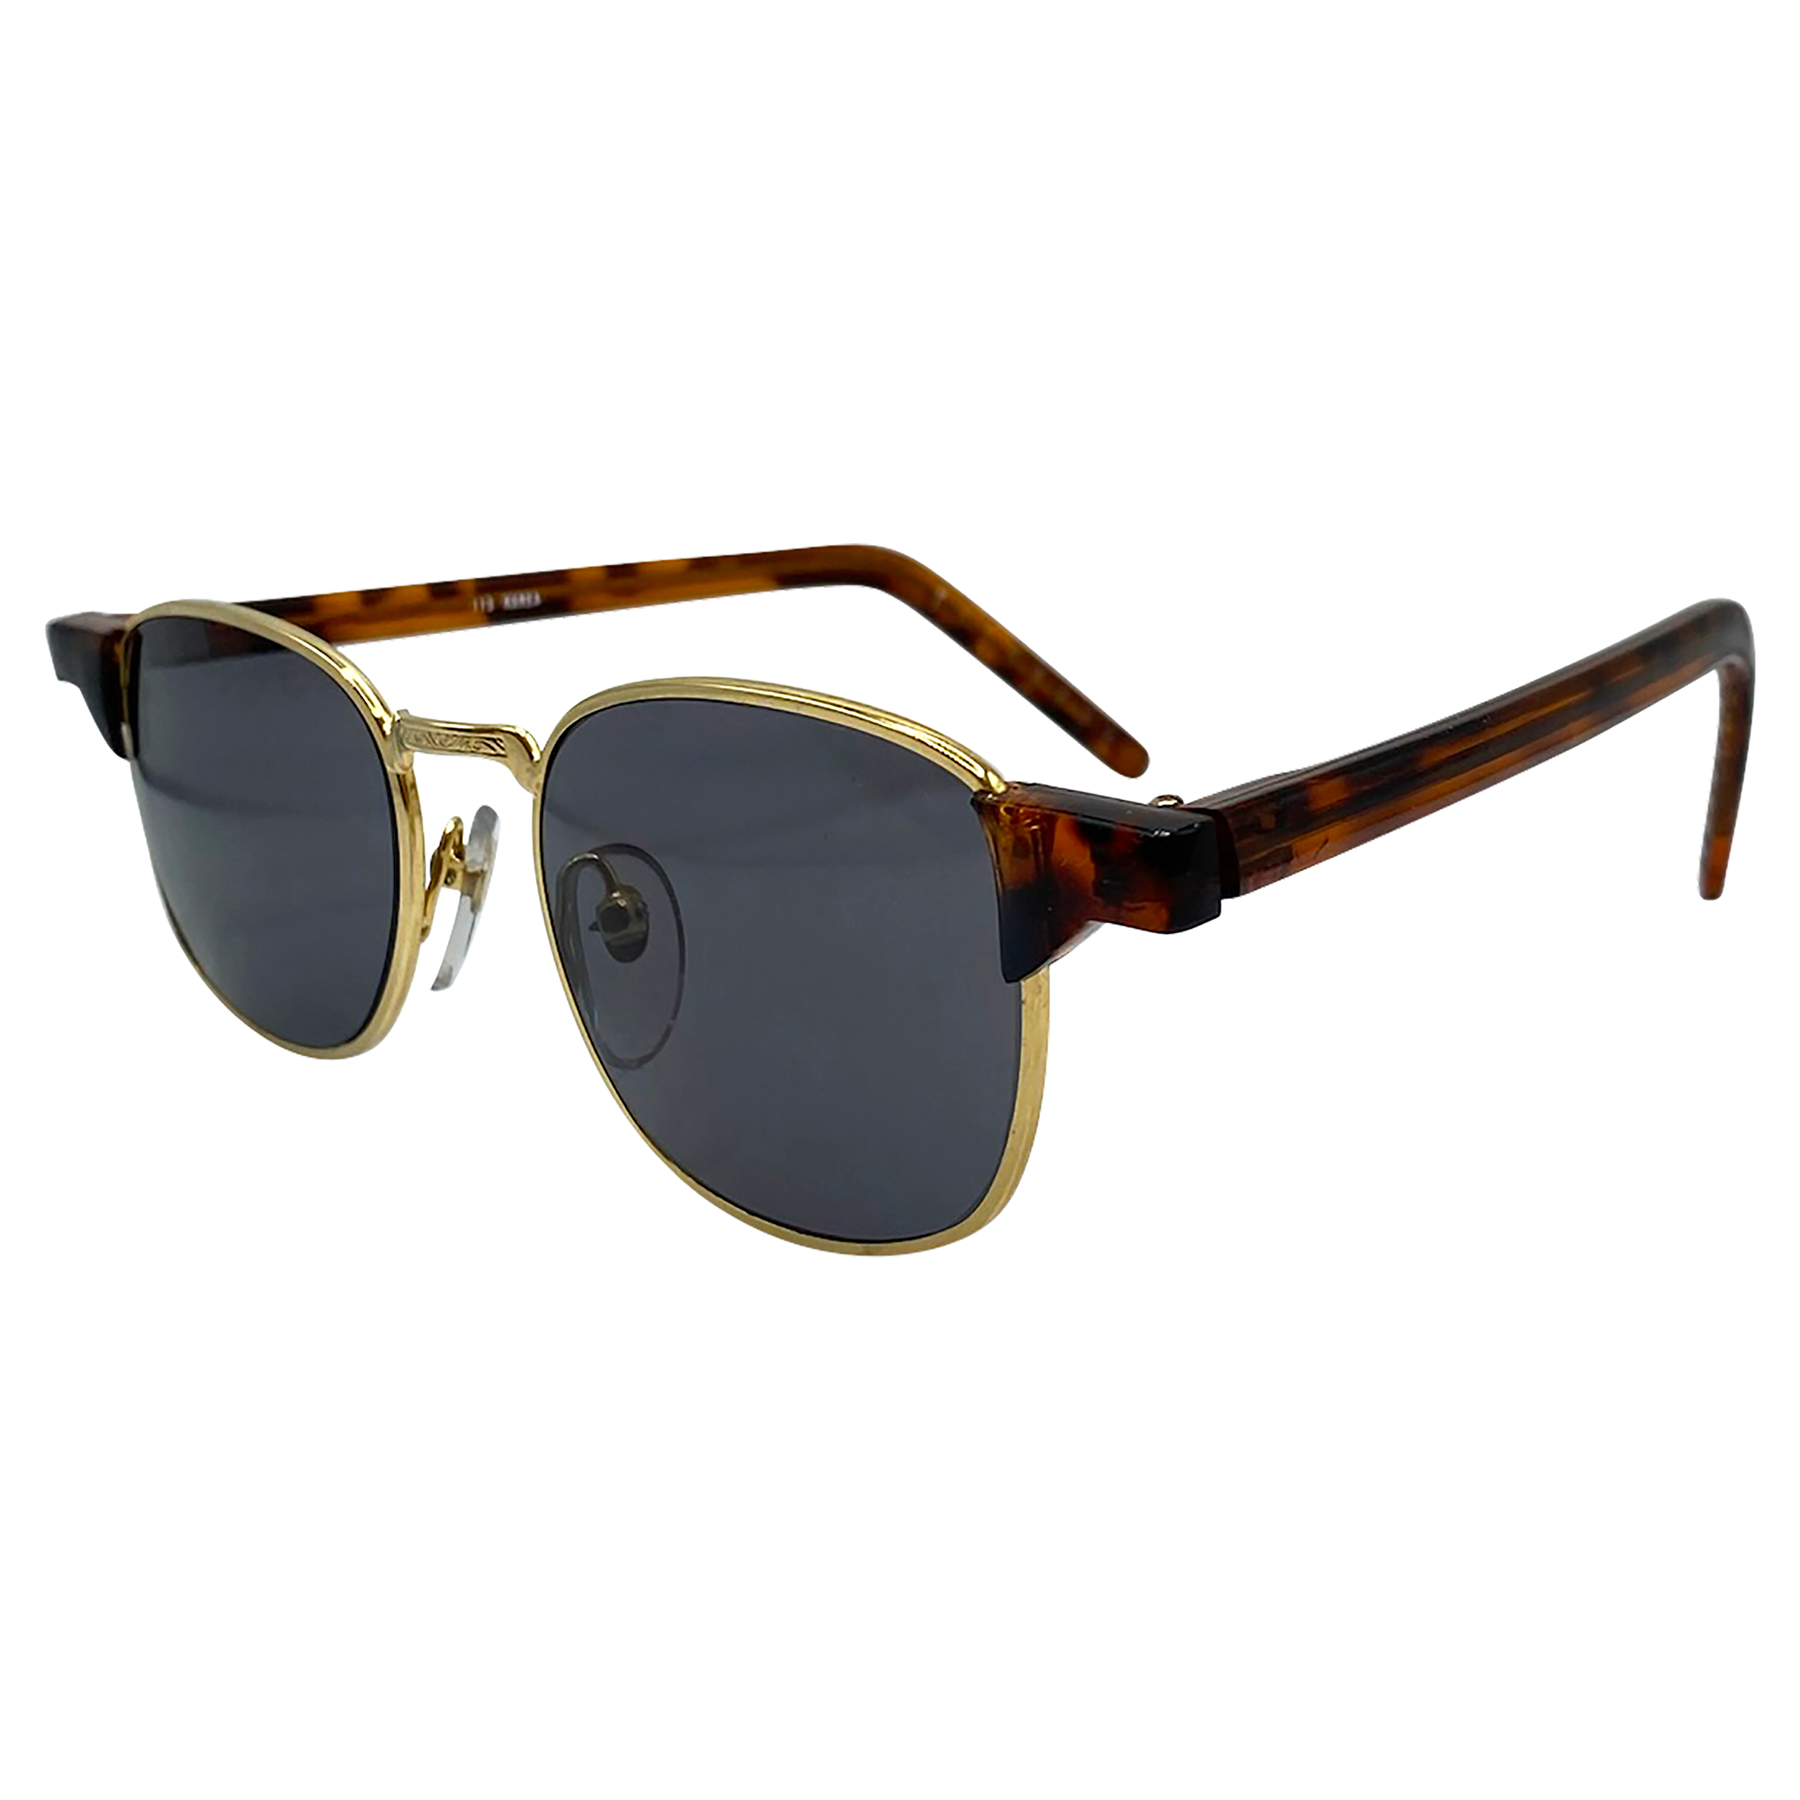 AILERON Tortoise Gold/Super Dark Square Sunglasses